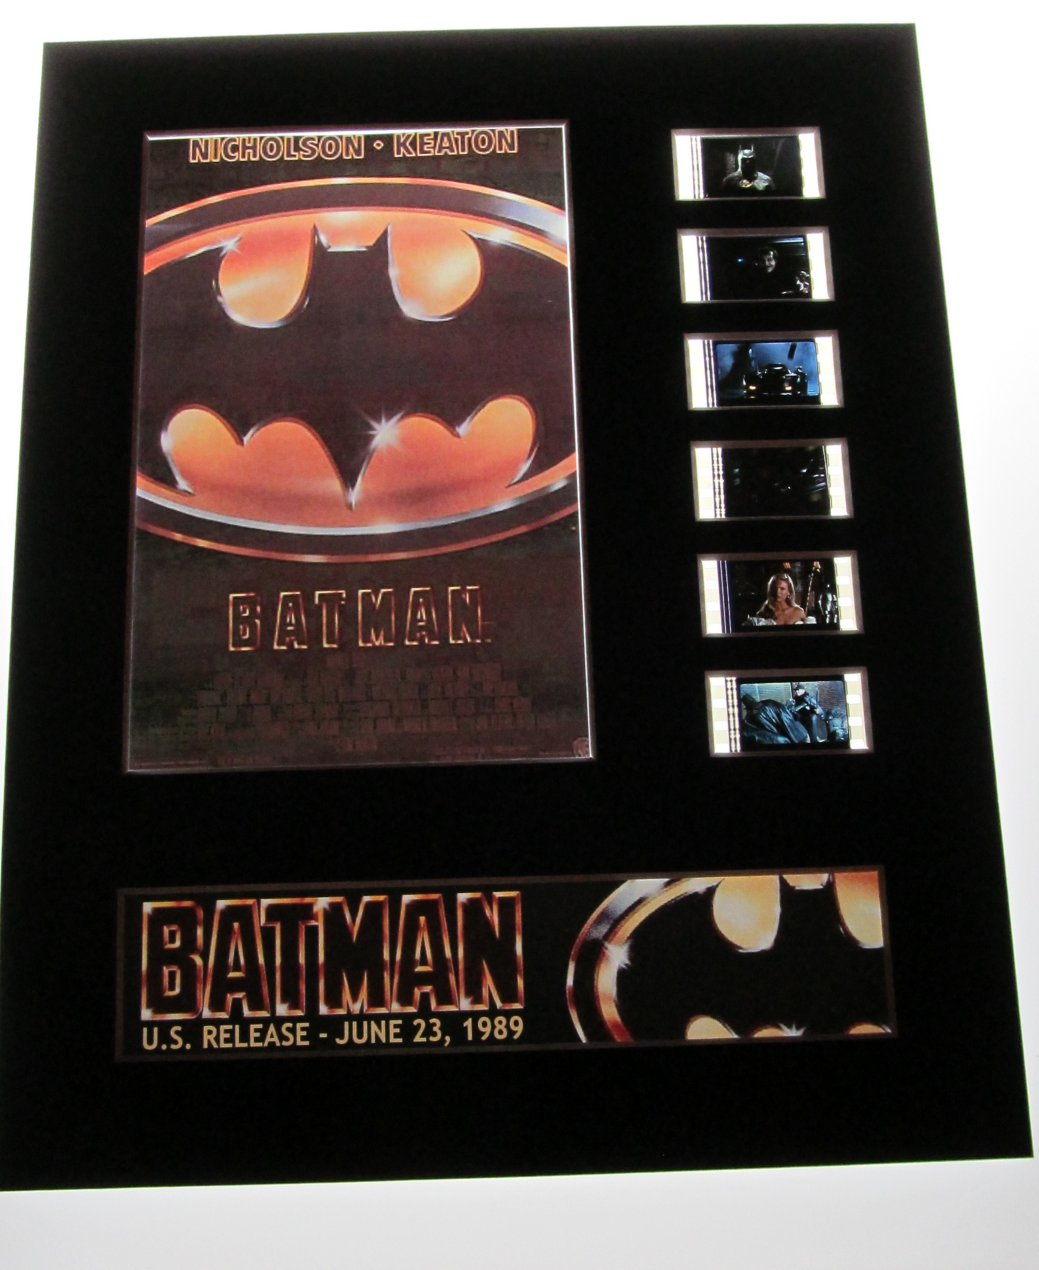 BATMAN Tim Burton Michael Keaton 1989 35mm Movie Film Cell Display 8x10 Presentation